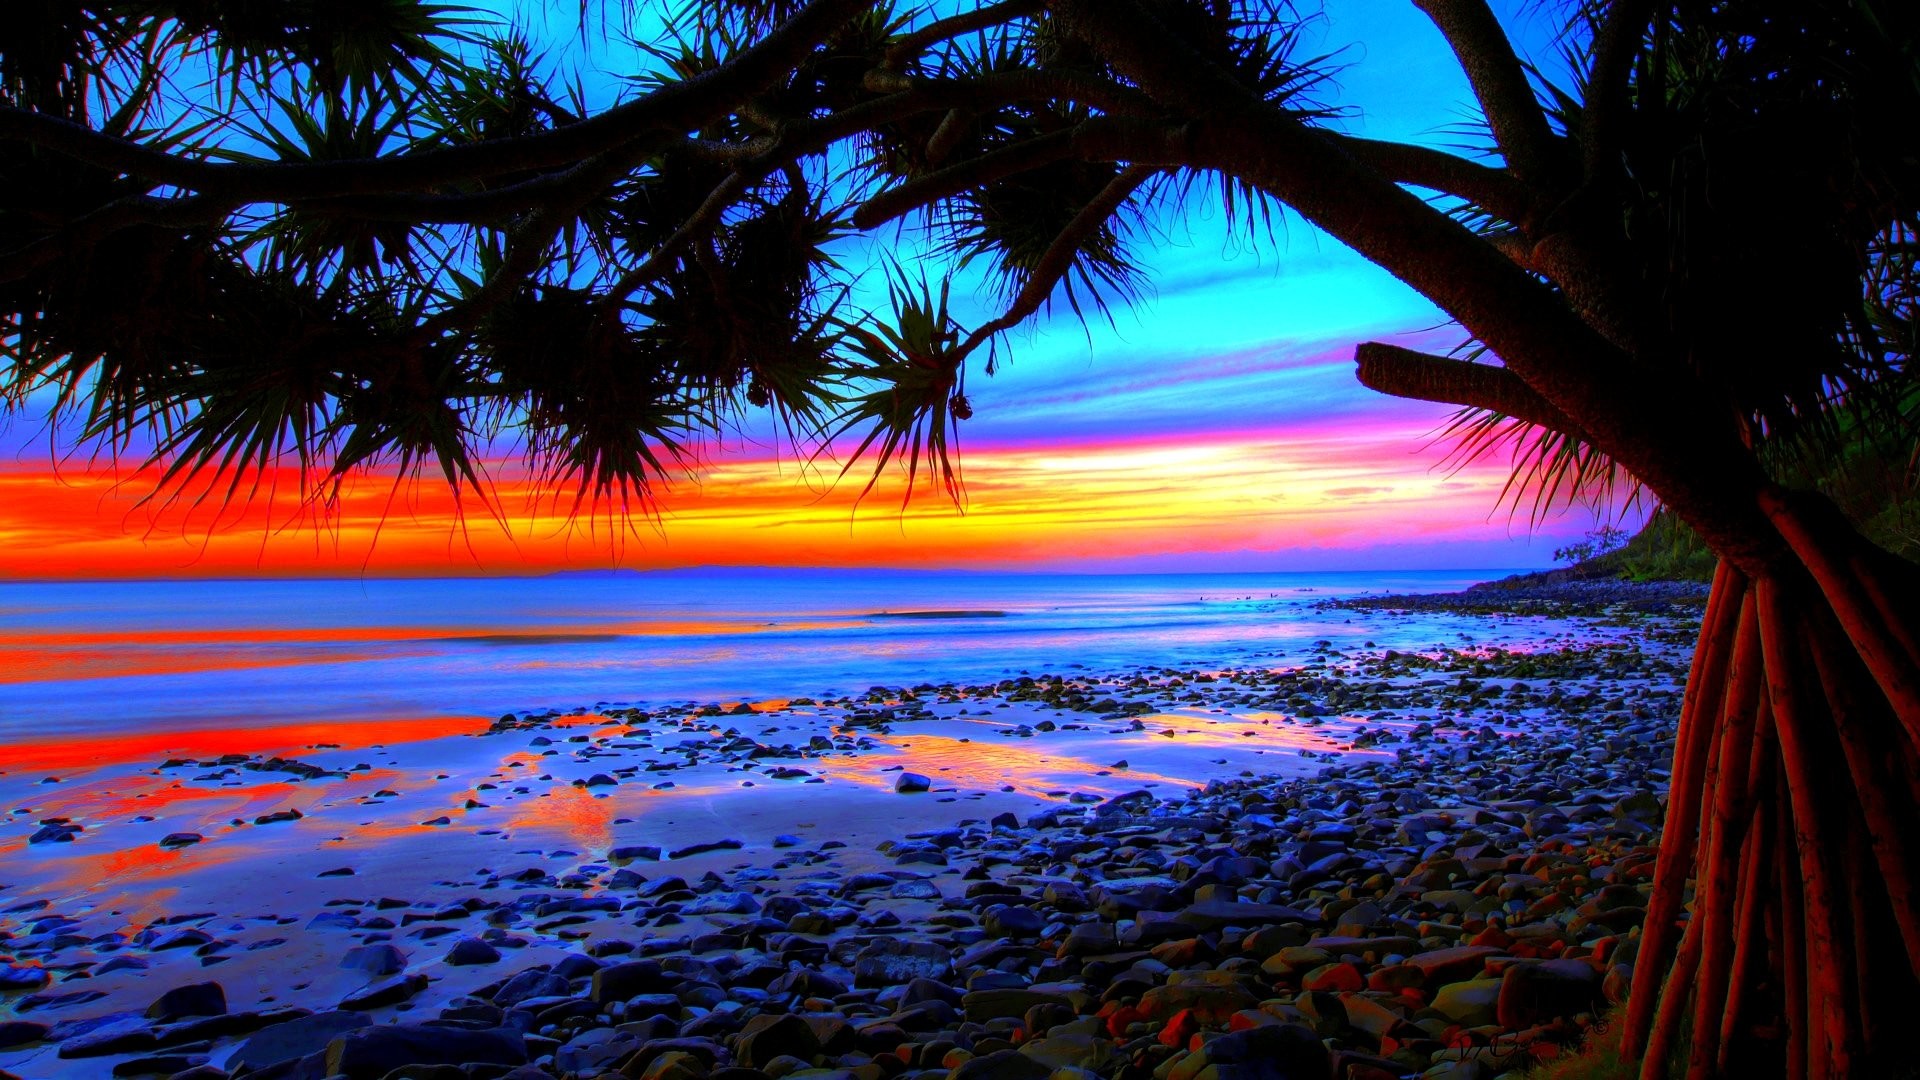 1920x1080 wallpaper-sunset-background-beach-wallpapers-beaches-high-images-definition.jpg  (1920Ã1080) | Florida | Pinterest | Beach wallpaper, Wallpaper and Beach